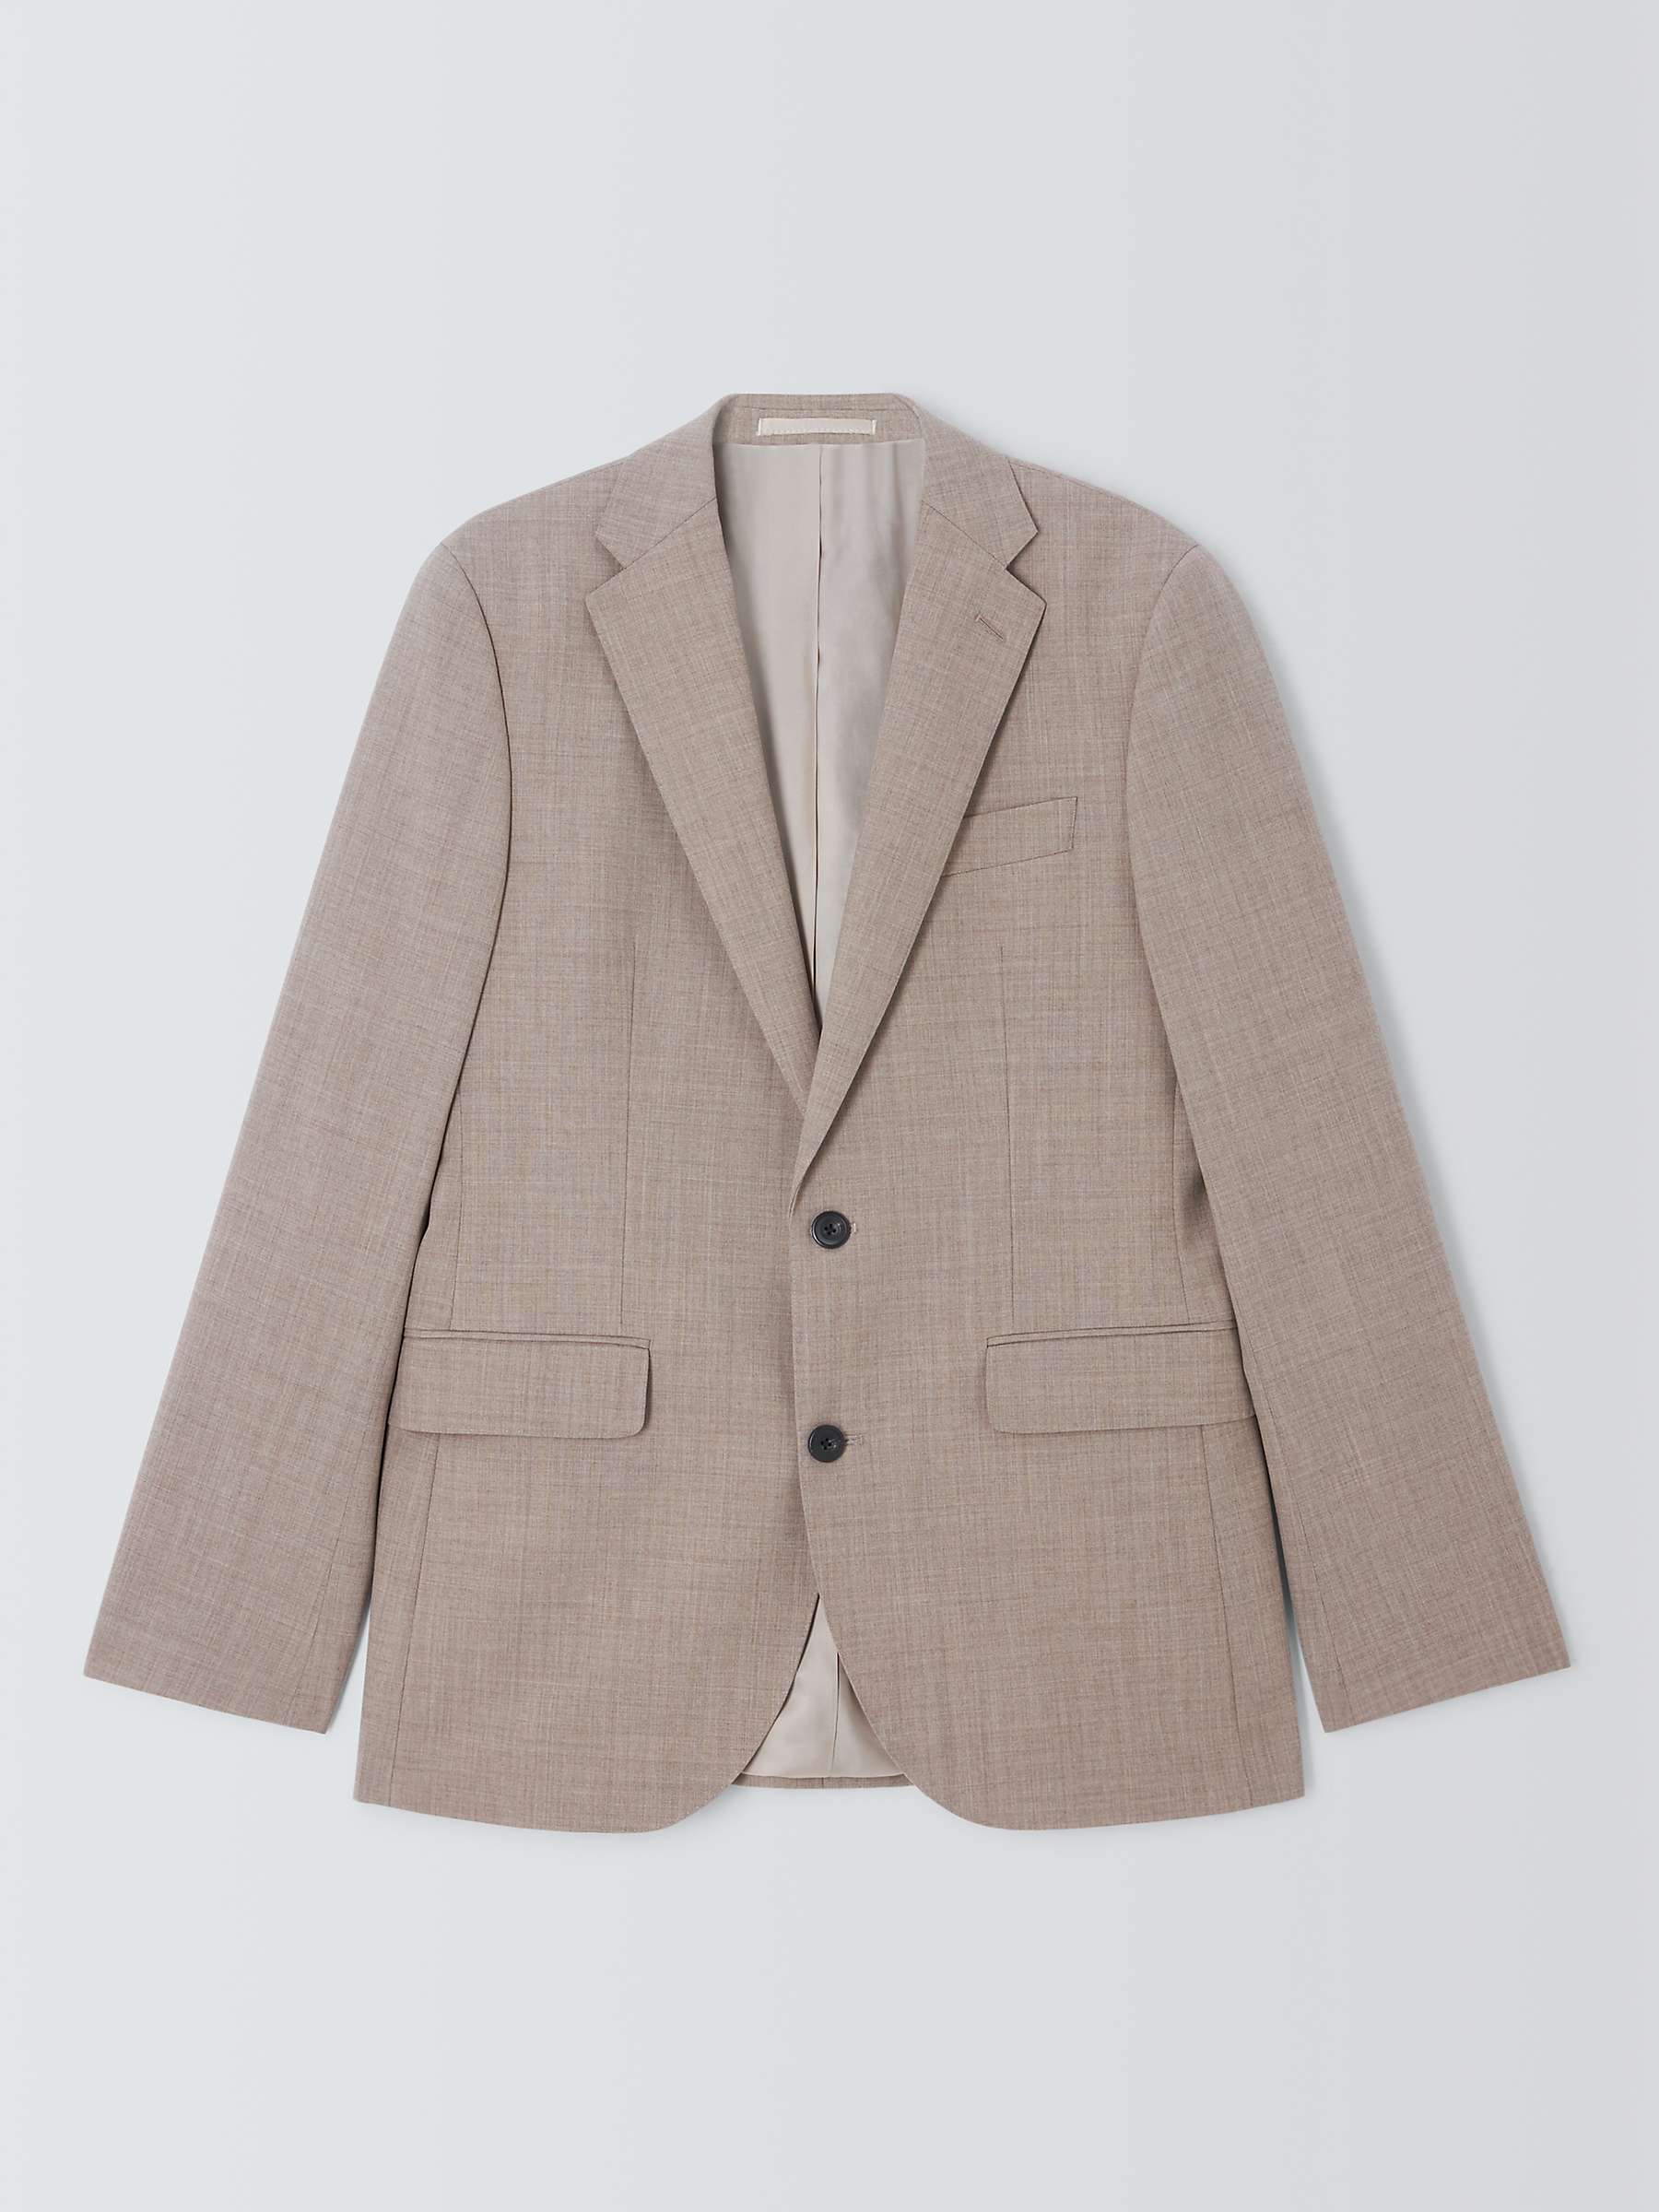 Buy John Lewis Stowe Regular Fit Wool Suit Jacket, Sand Online at johnlewis.com